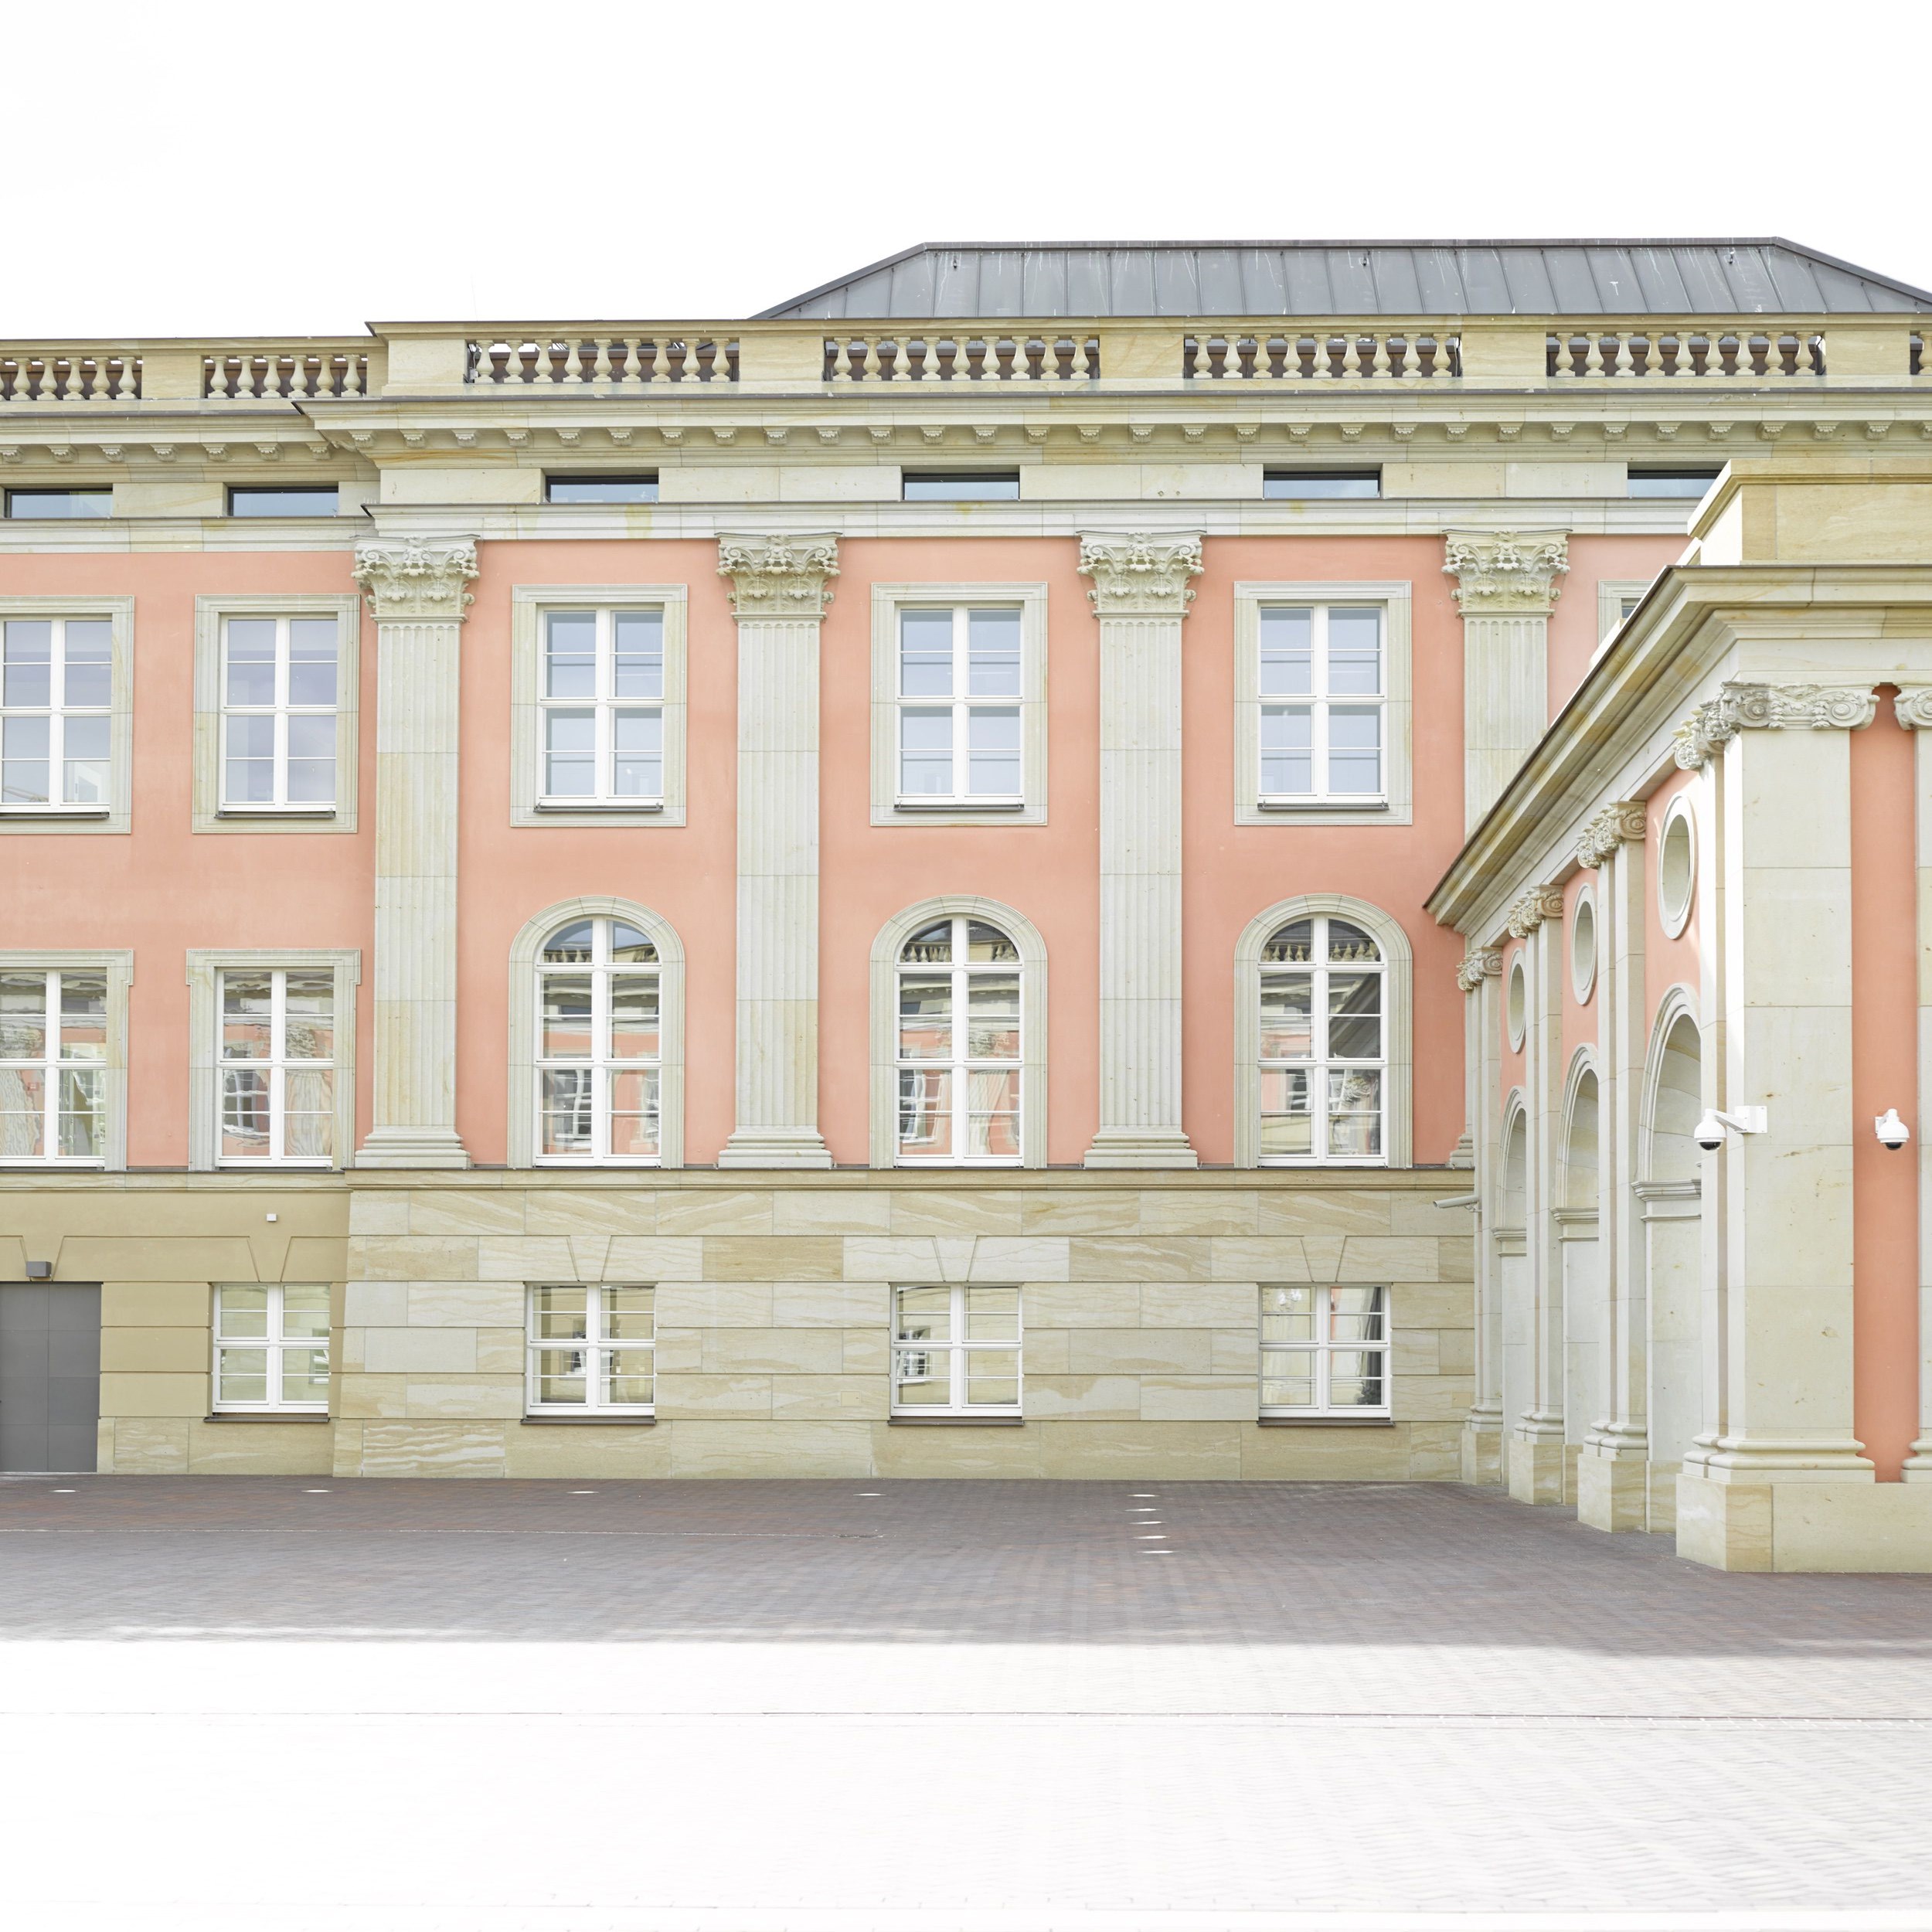 ISOLAR NEUTRALUX® - Landtag - Potsdam - Germany